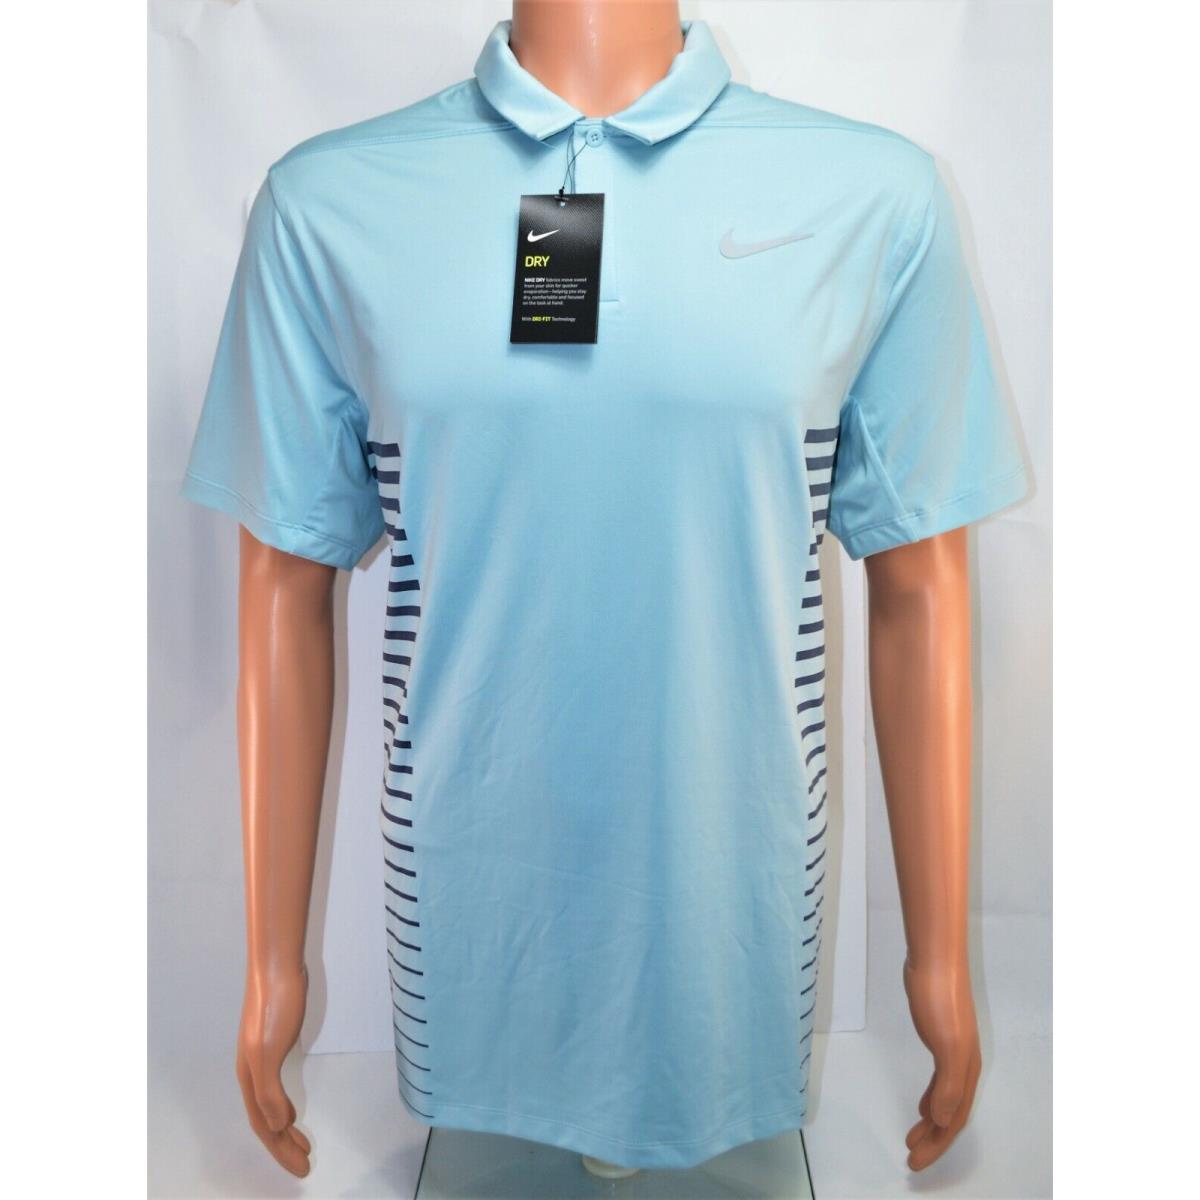 Disney Exclusive Nike Golf Dri Fit Lite Blue Shirt Sz X Large XL 890091 452